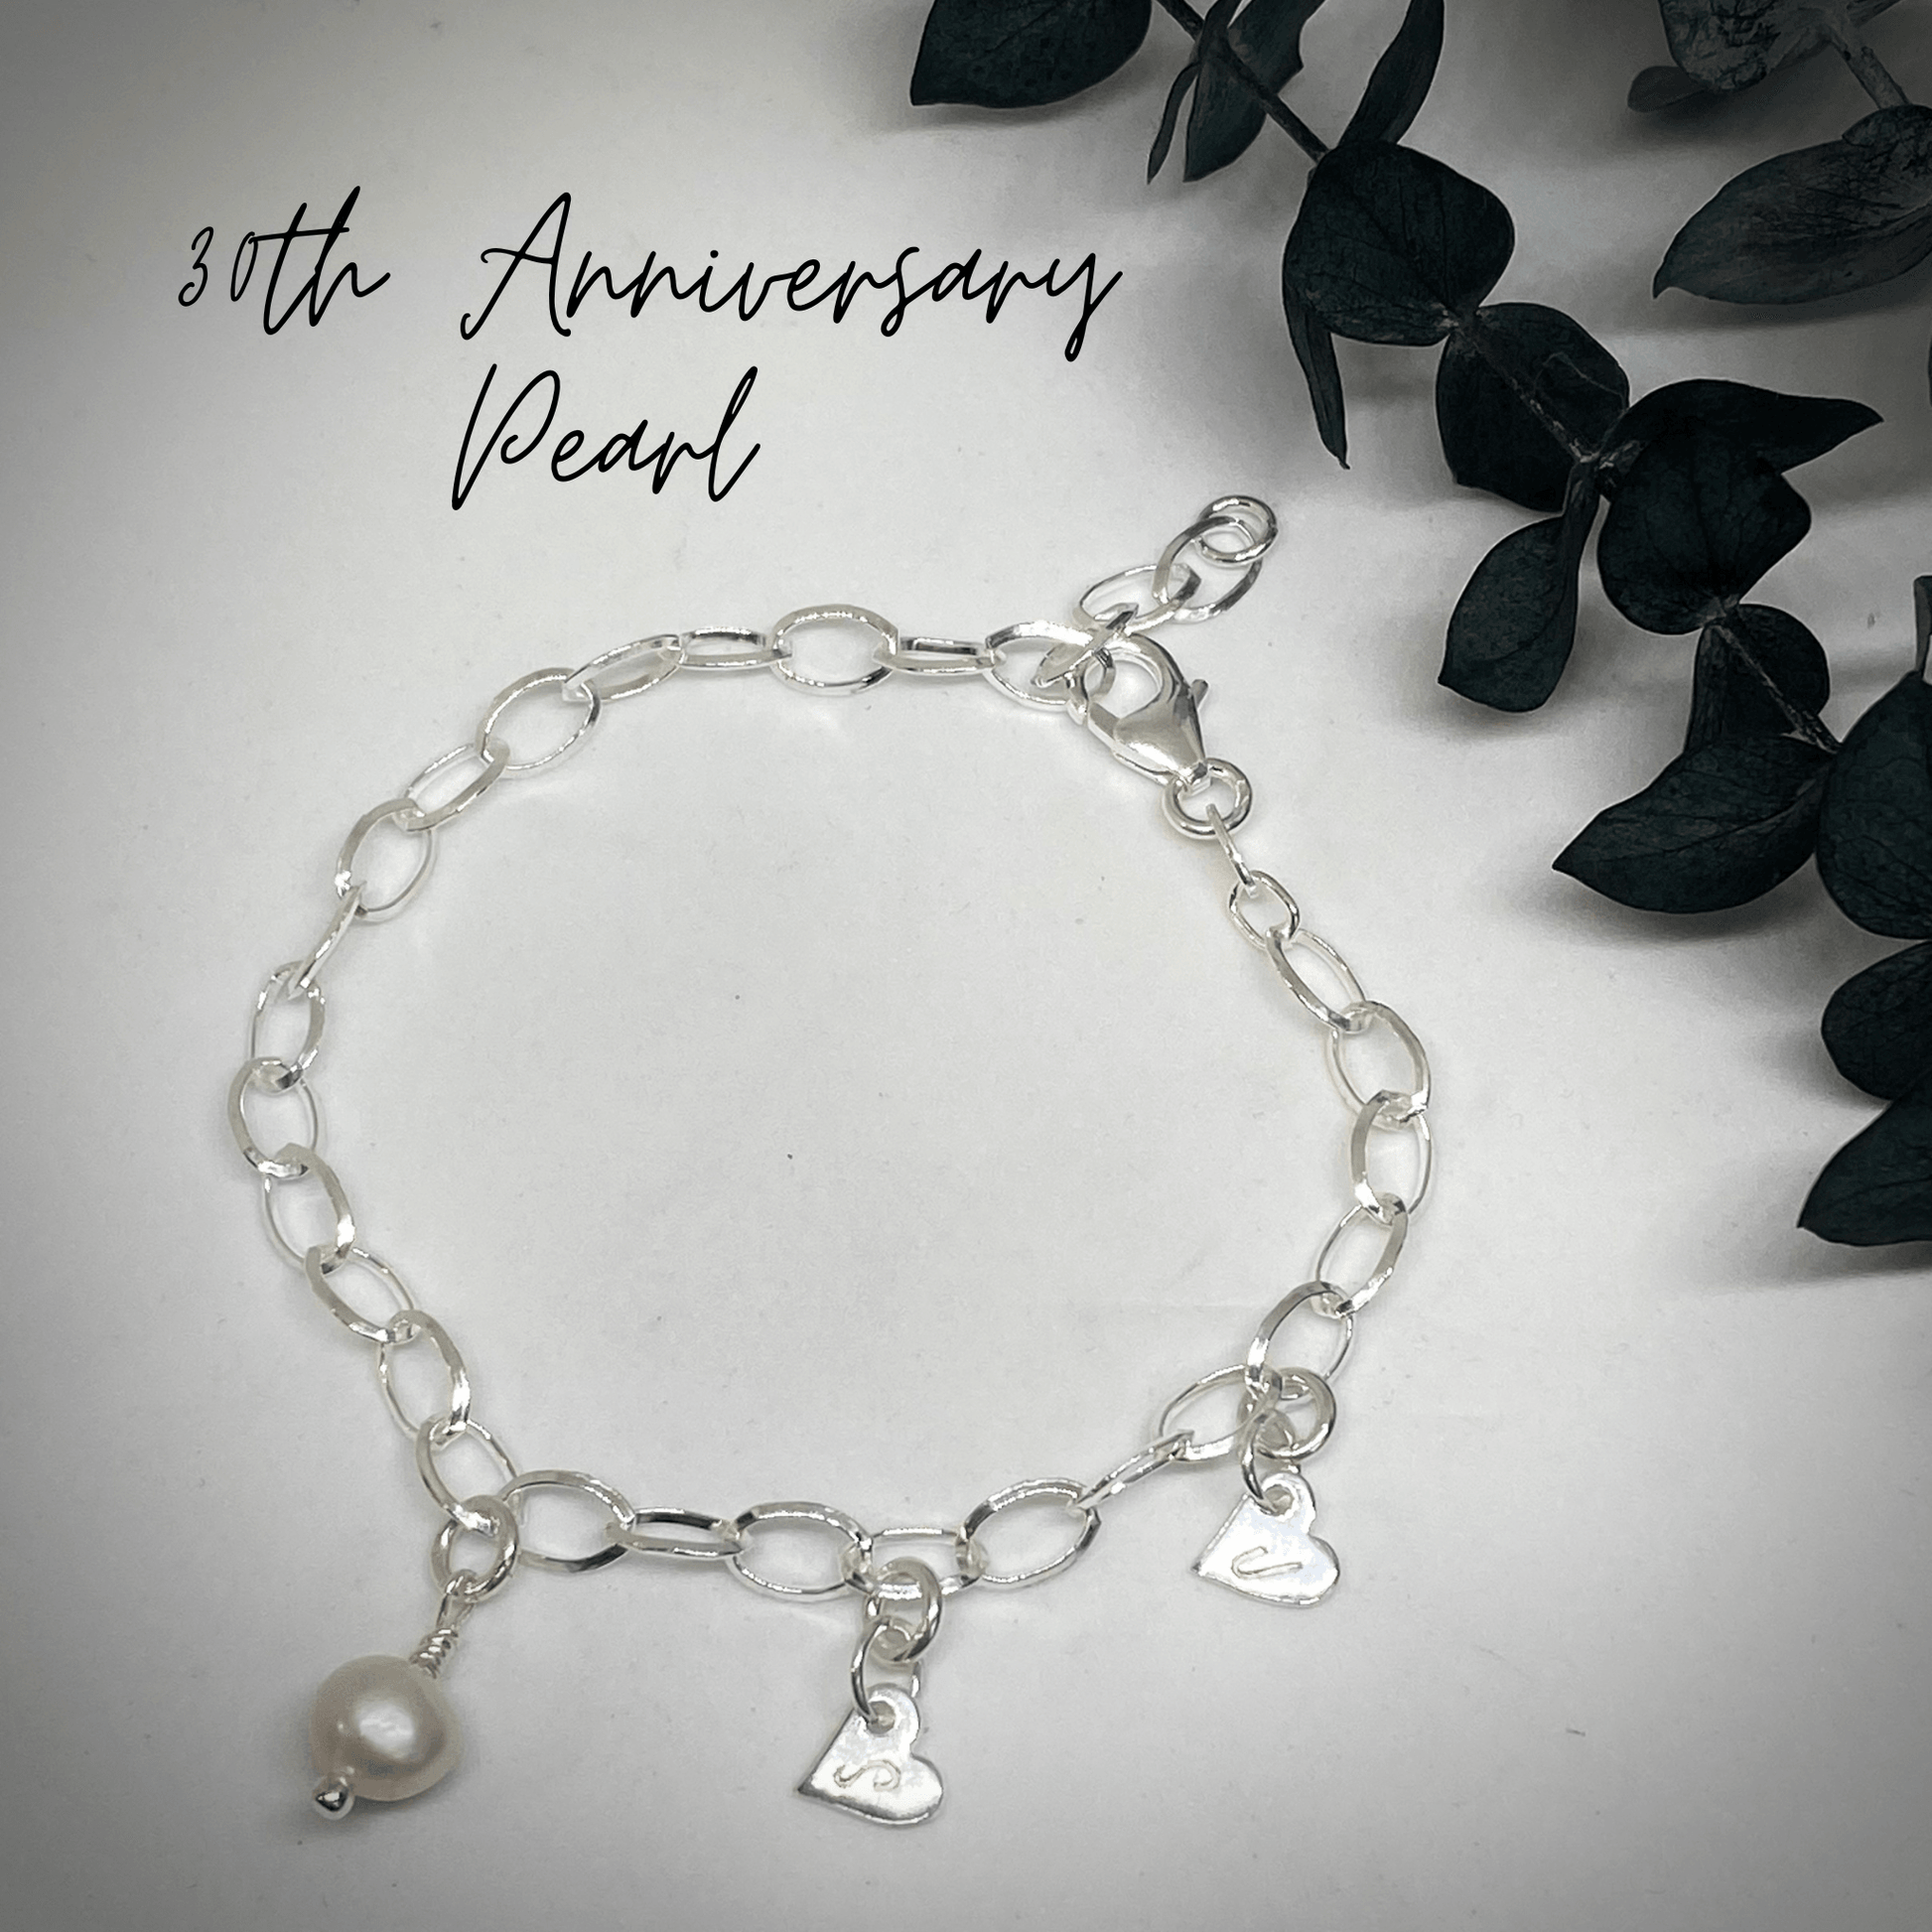 SET | 30th Anniversary Necklace, Earrings & Bracelet | Freshwater Pearl | Sterling silver | 30th wedding anniversary gift - RACHEL SHRIEVES DESIGN